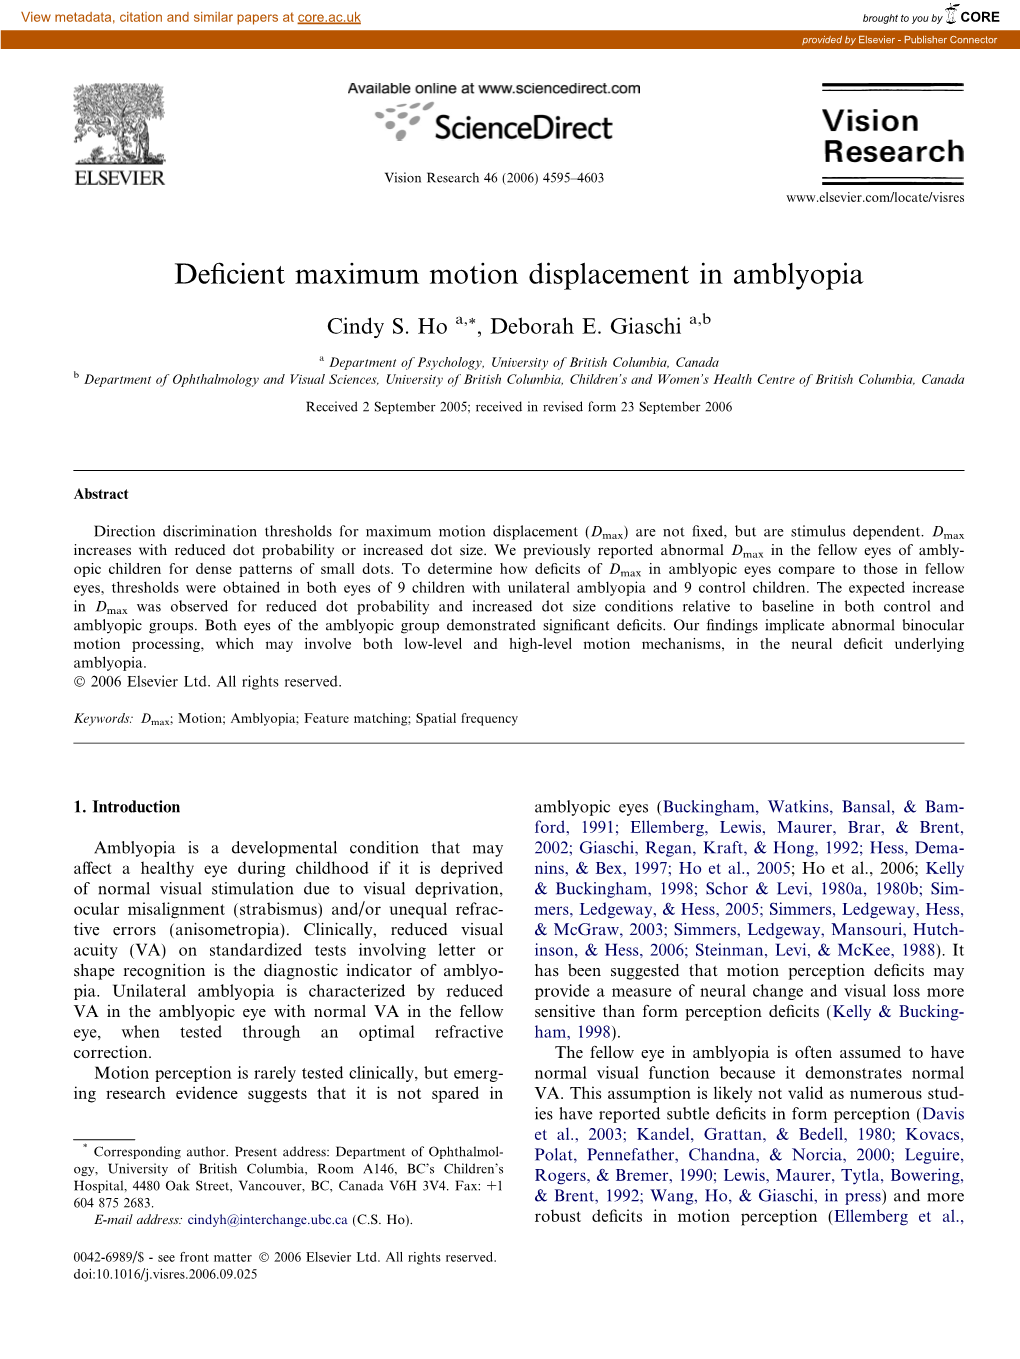 Deficient Maximum Motion Displacement in Amblyopia